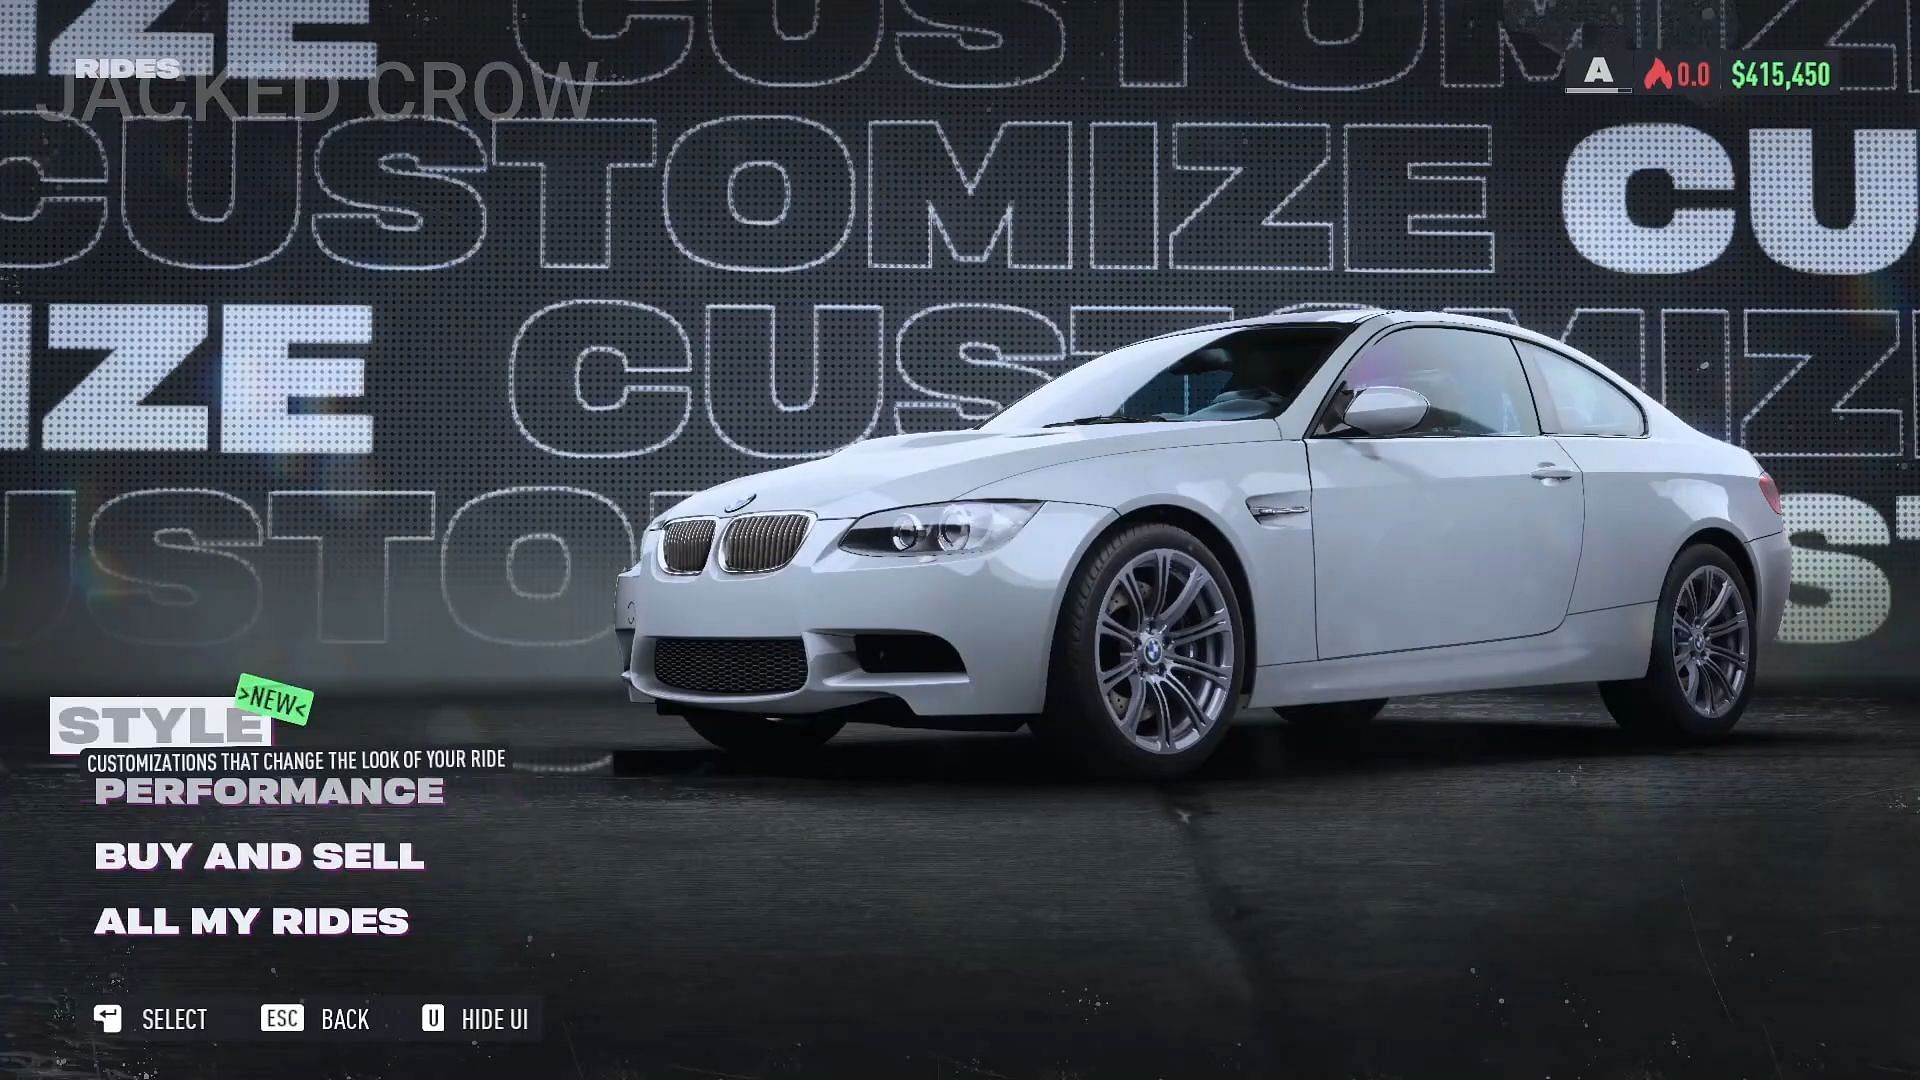 The BMW M3 Coupe (Image via YouTube/Jacked Crow)